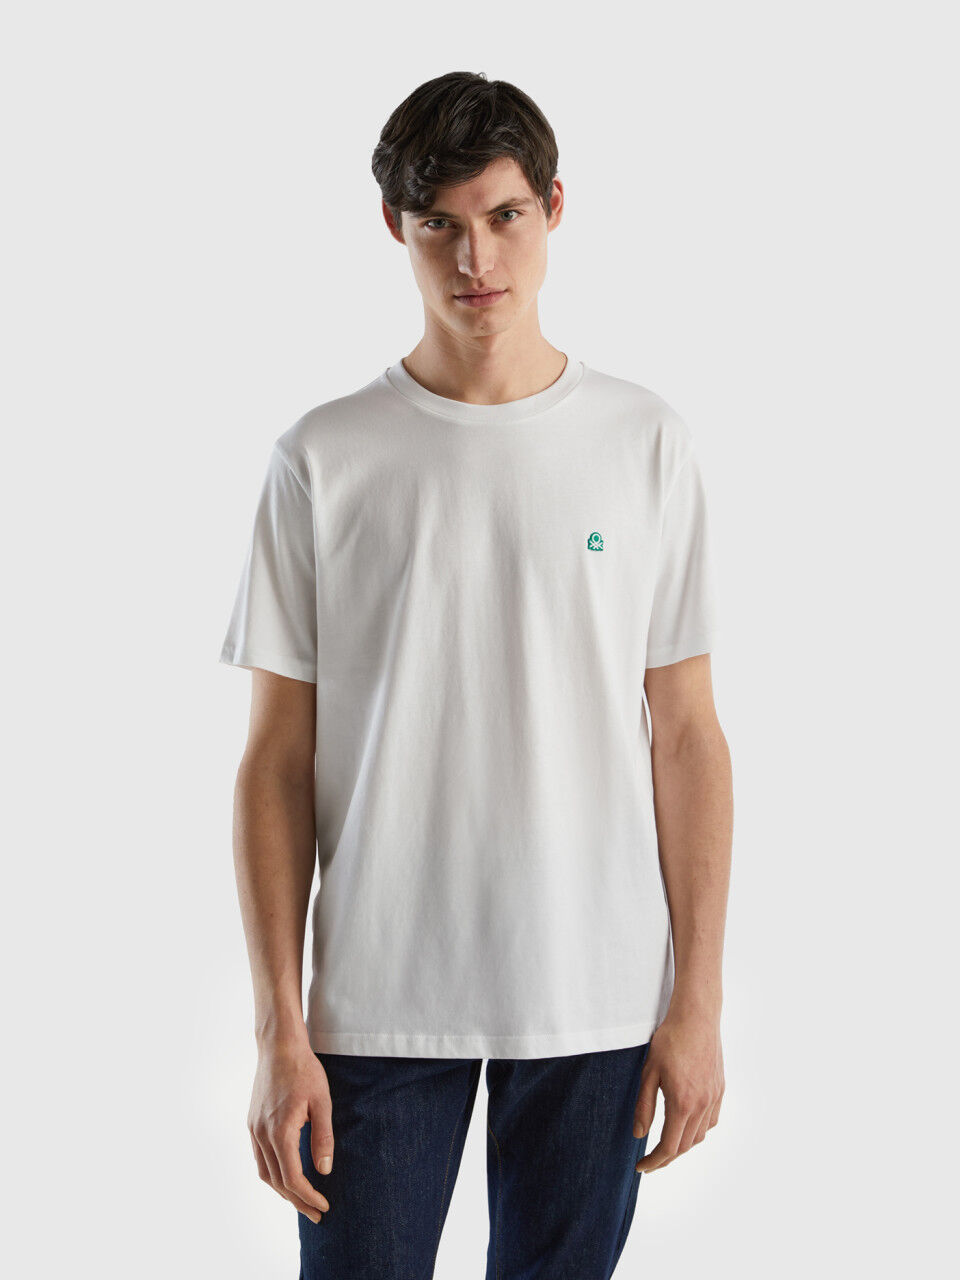 Camiseta básica de 100 % algodón orgánico